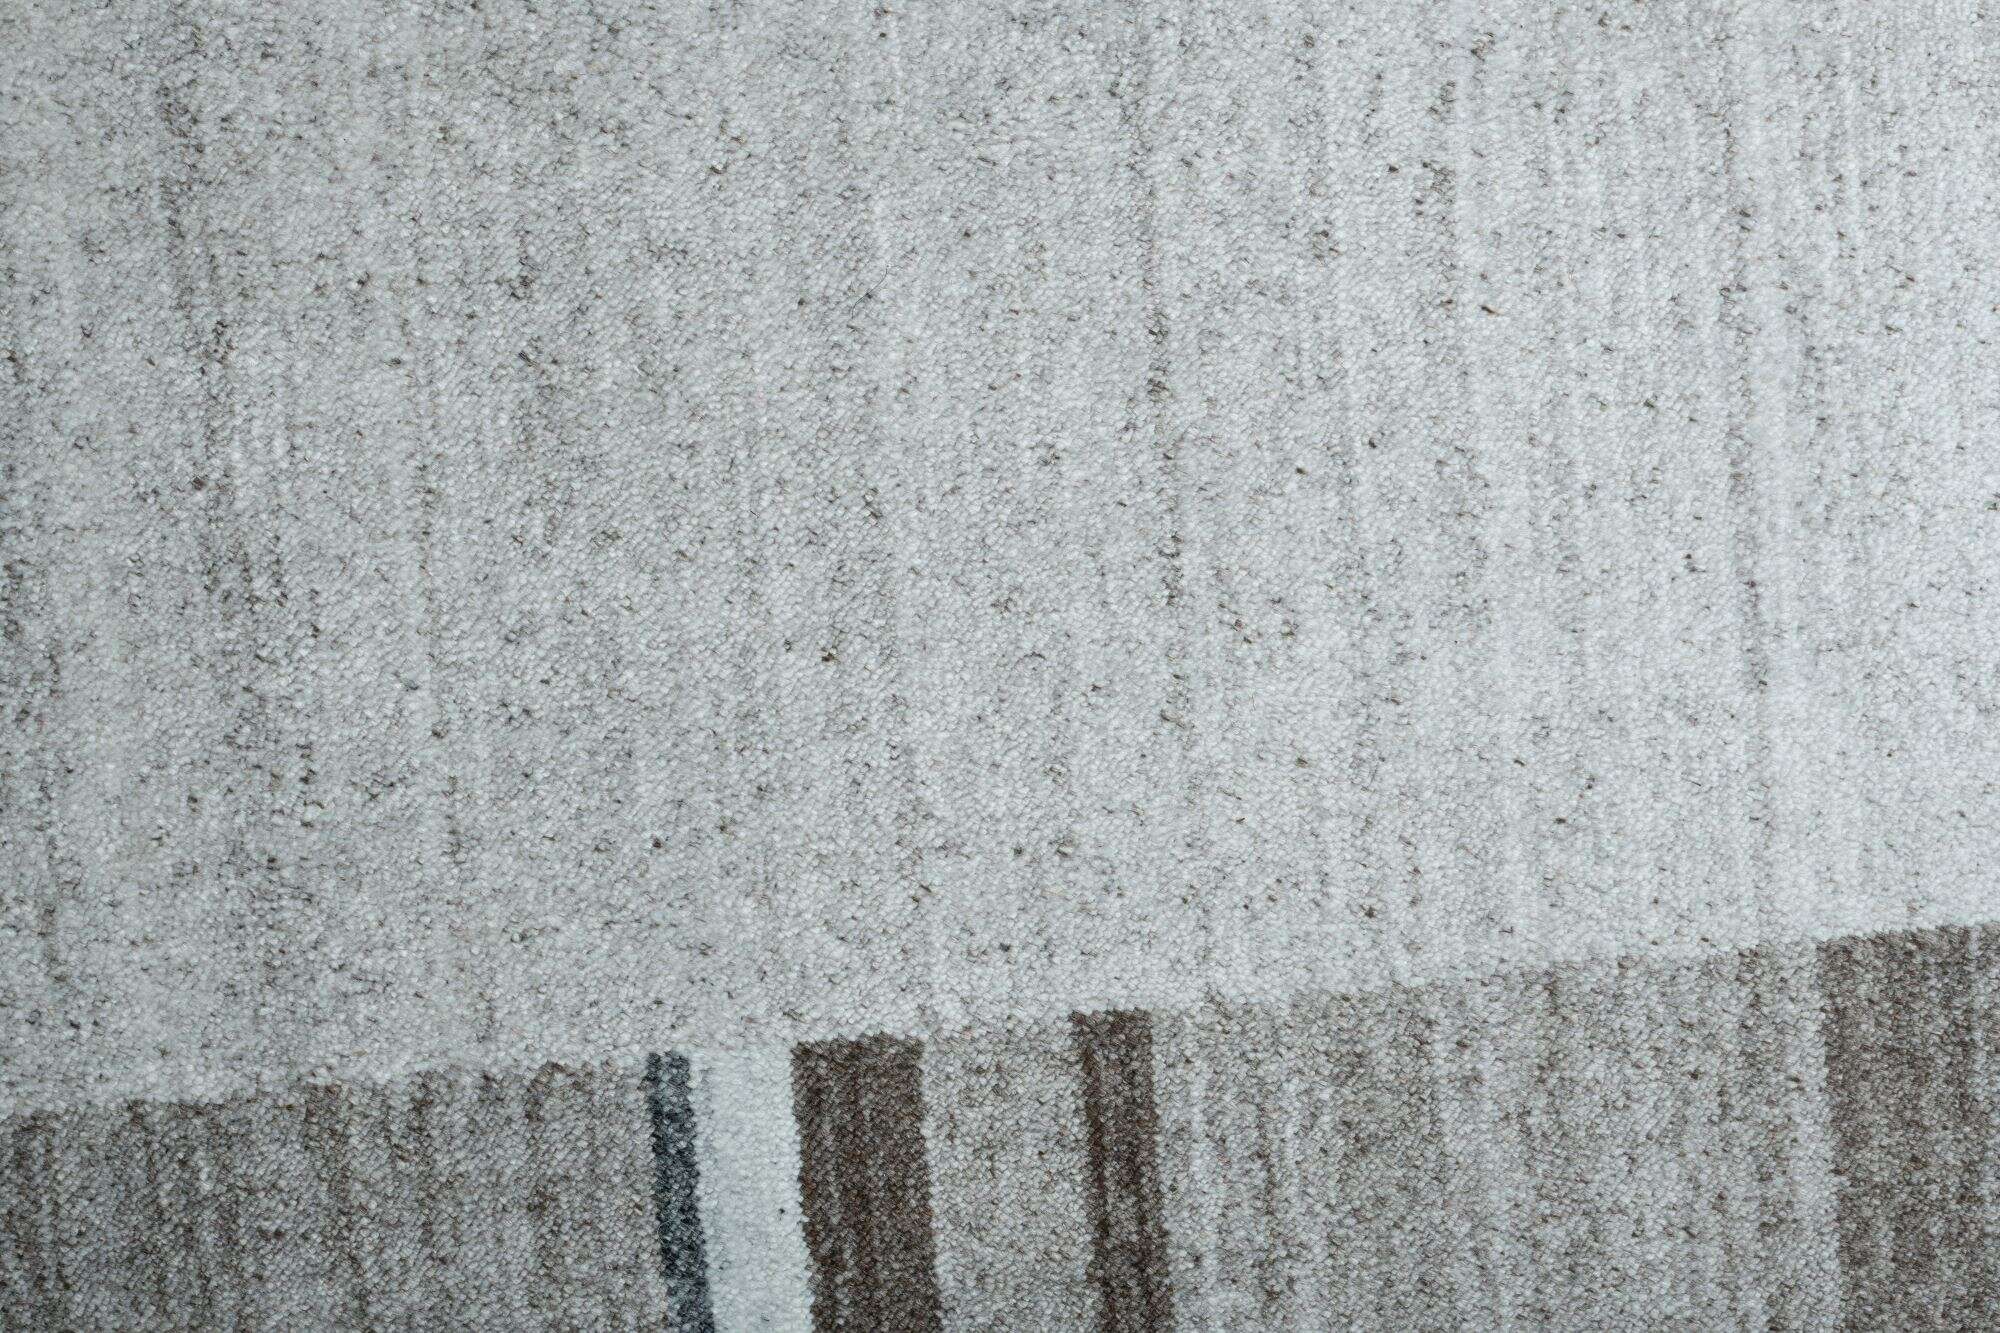 Teppich Modern Nevada Viscose Handgewebt 160x230cm grau